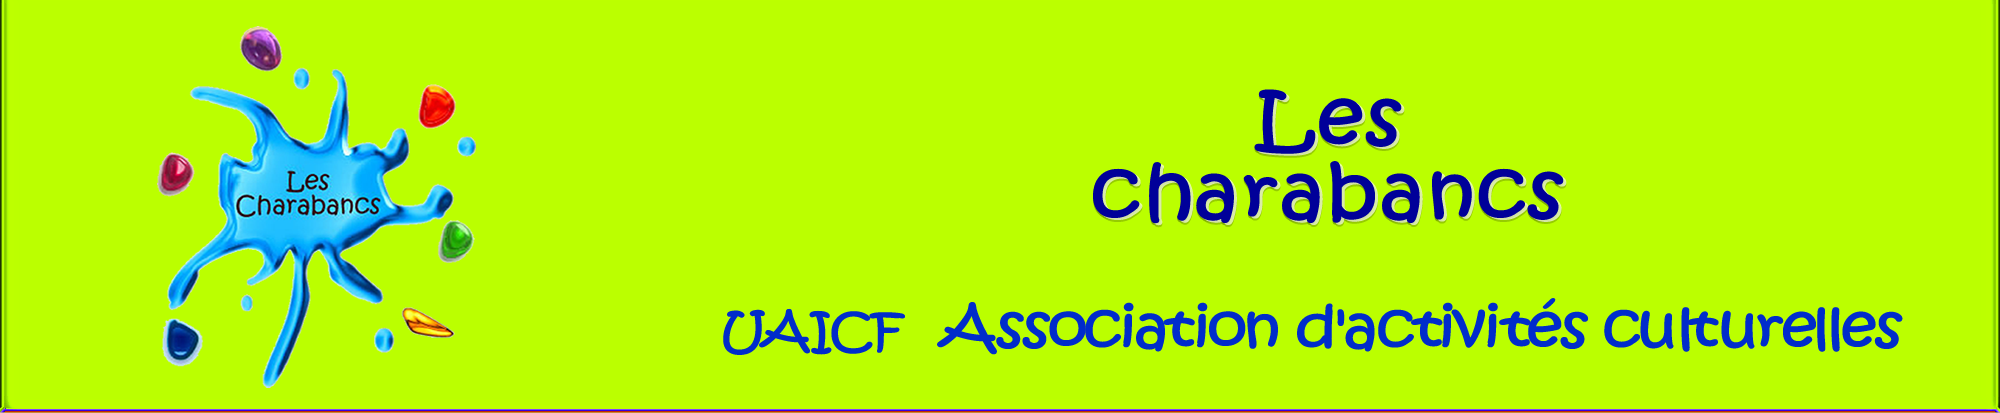 Logo-UAICF-Charabancs-annecy